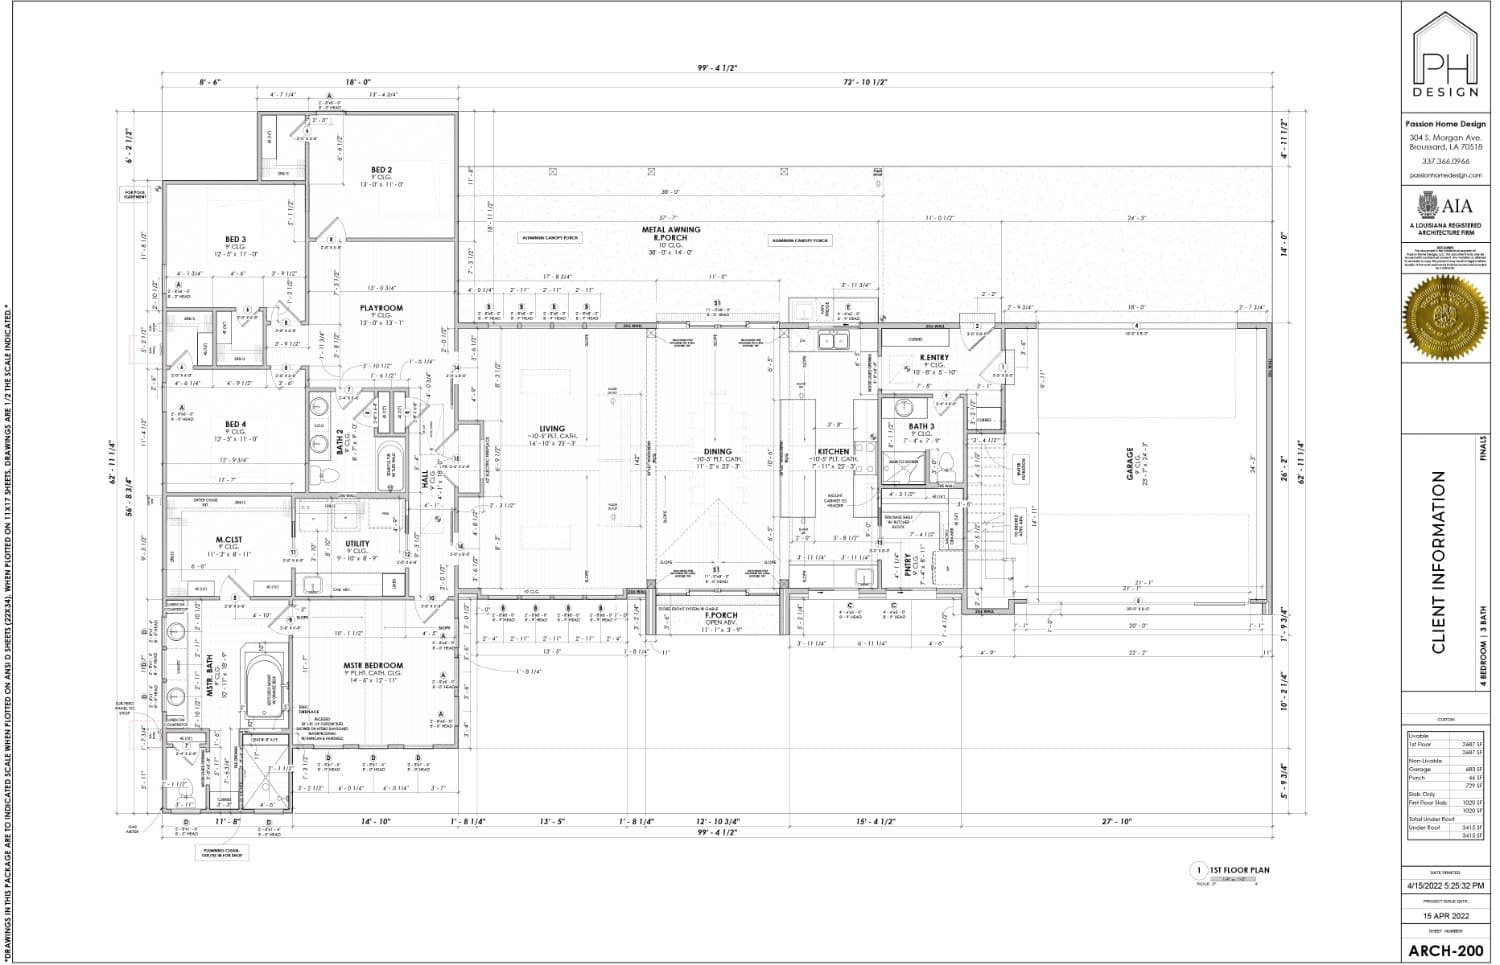 Floor plan page of blueprint plans